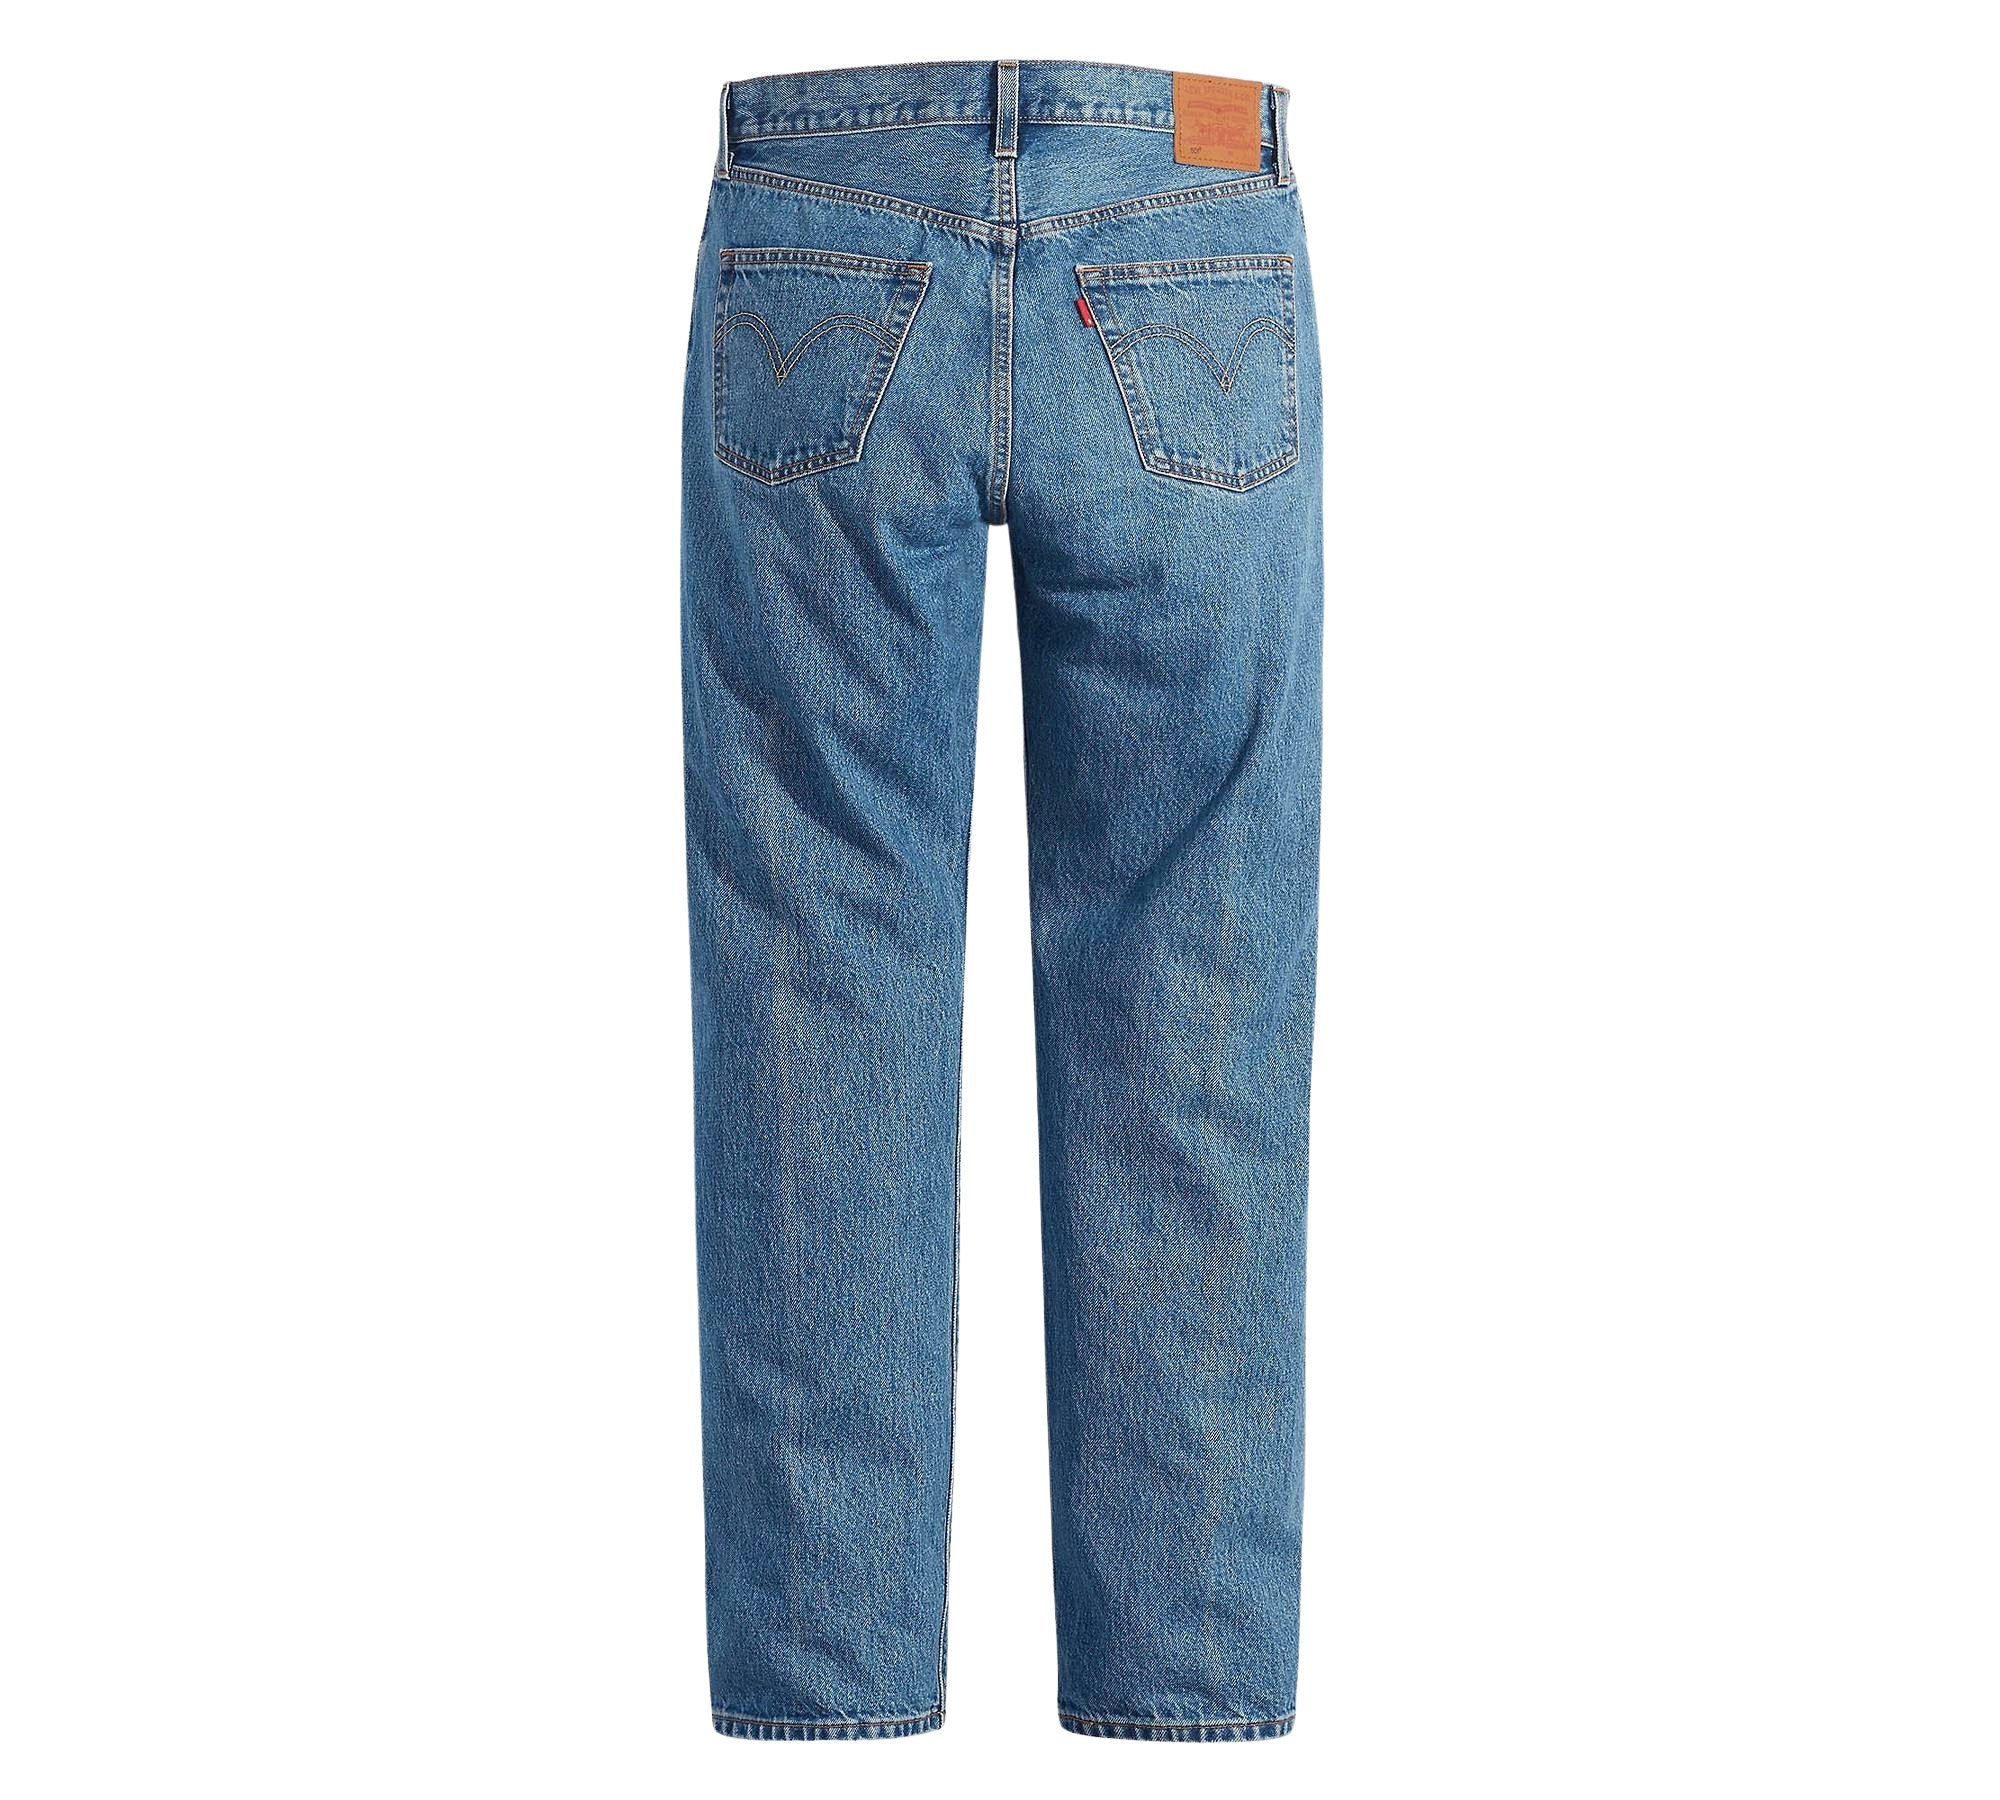 4 Pack - Vintage LEVI'S Classic Blue Zip Fly Jeans - Waist 54 - Length 30 - Vintage Superstore Online